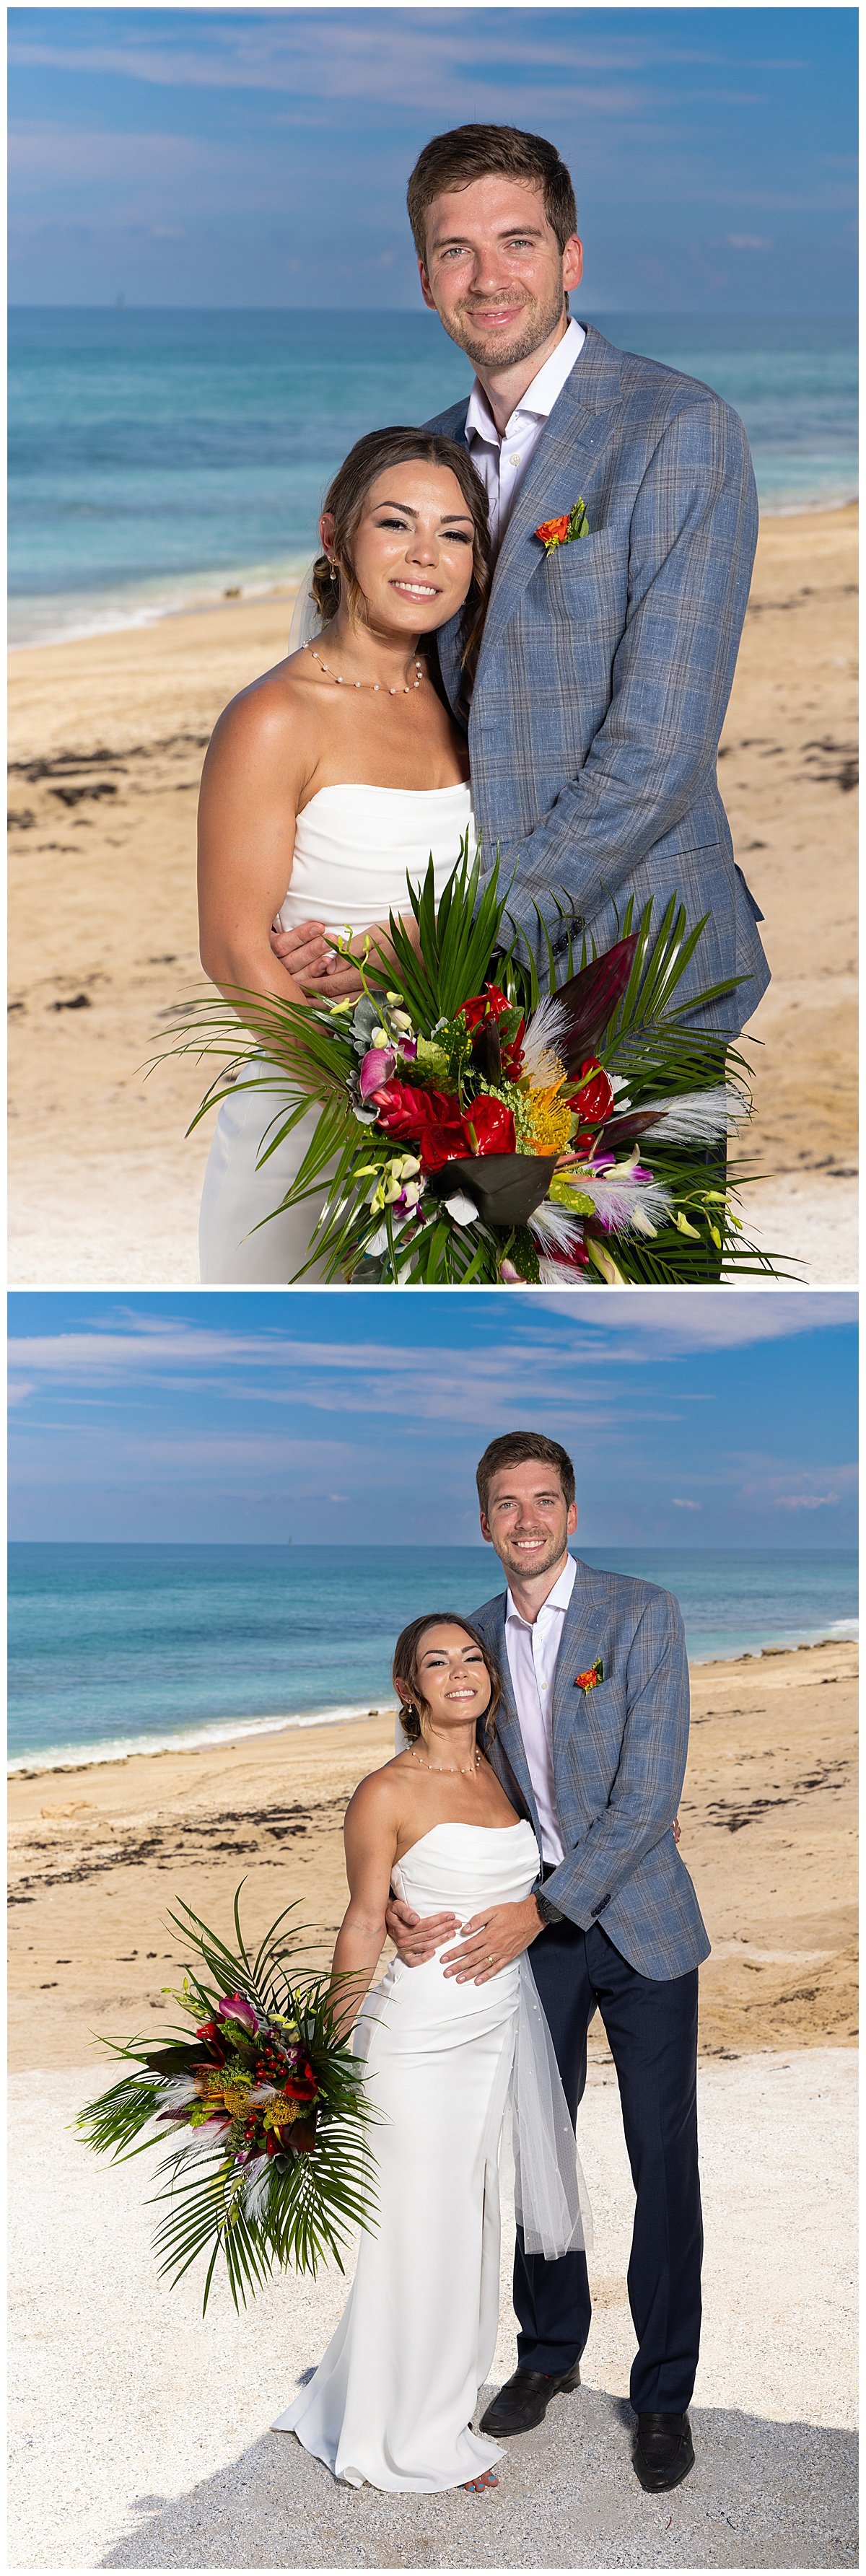 21 - Florida Beach Wedding.jpg